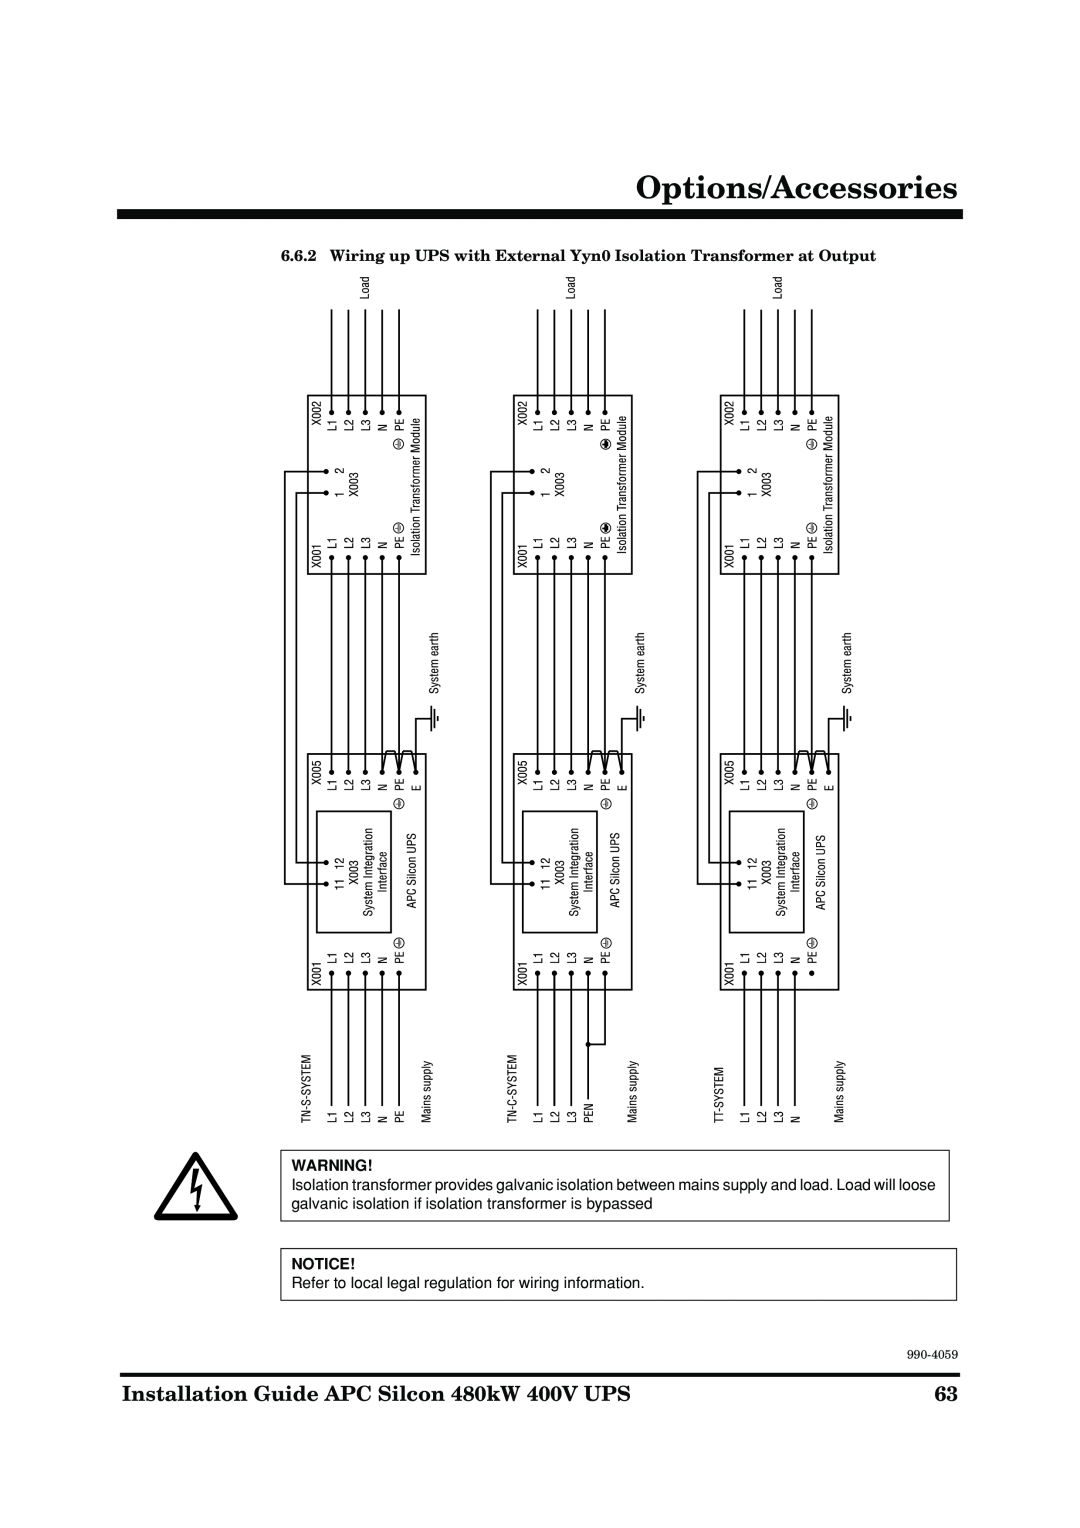 American Power Conversion manual Options/Accessories, Installation Guide APC Silcon 480kW 400V UPS, 990-4059 